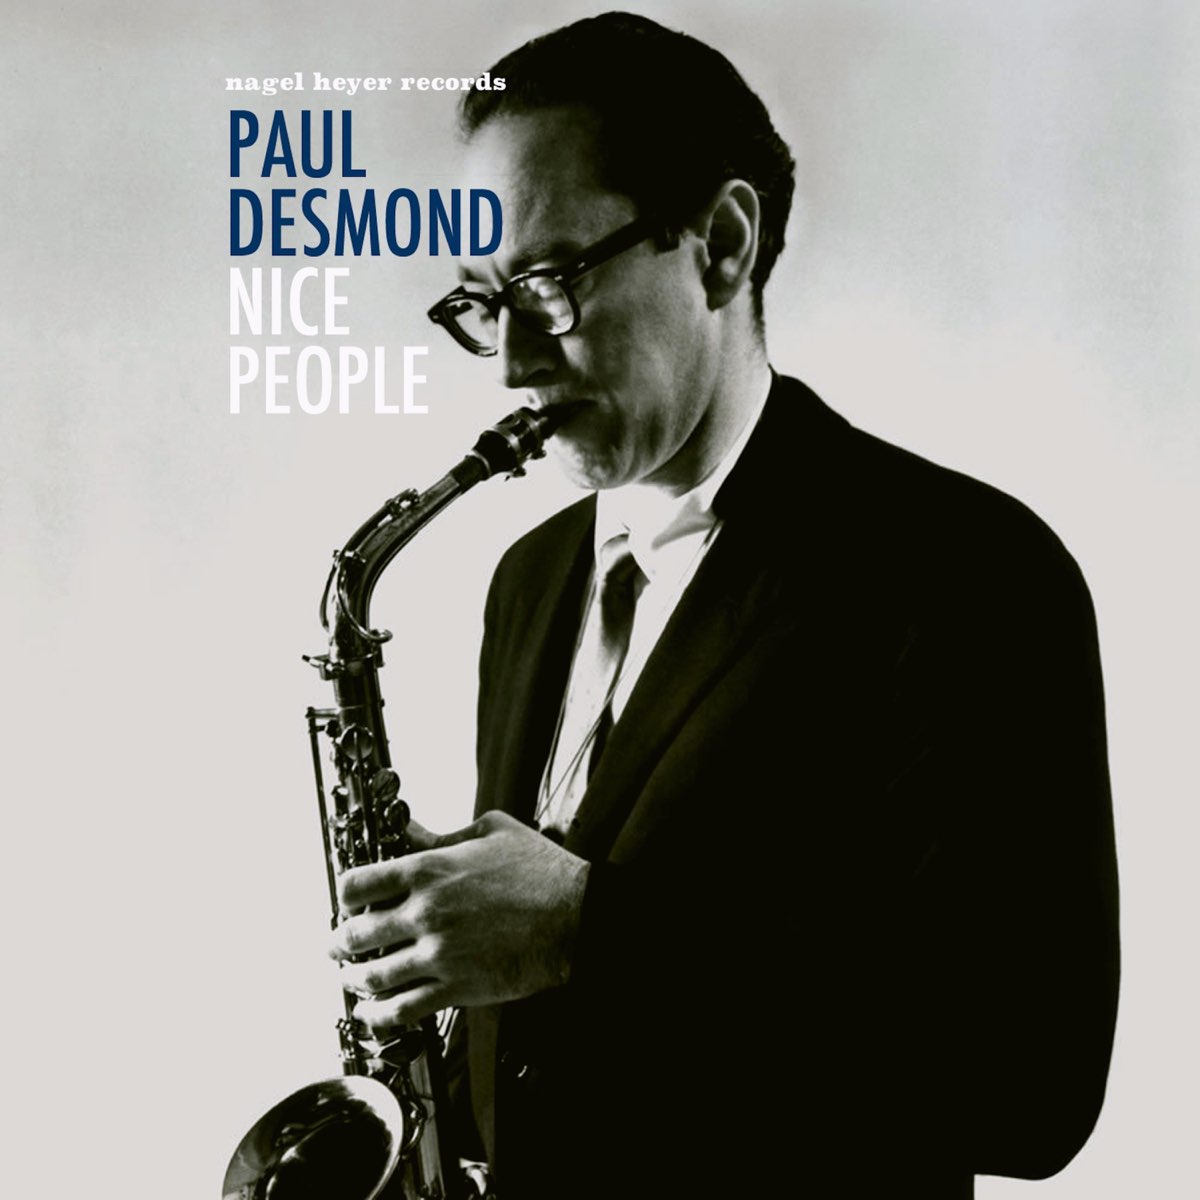 Paul desmond. Пол Дезмонд саксофонист. Dave Brubeck саксофонист. Paul Desmond foto.